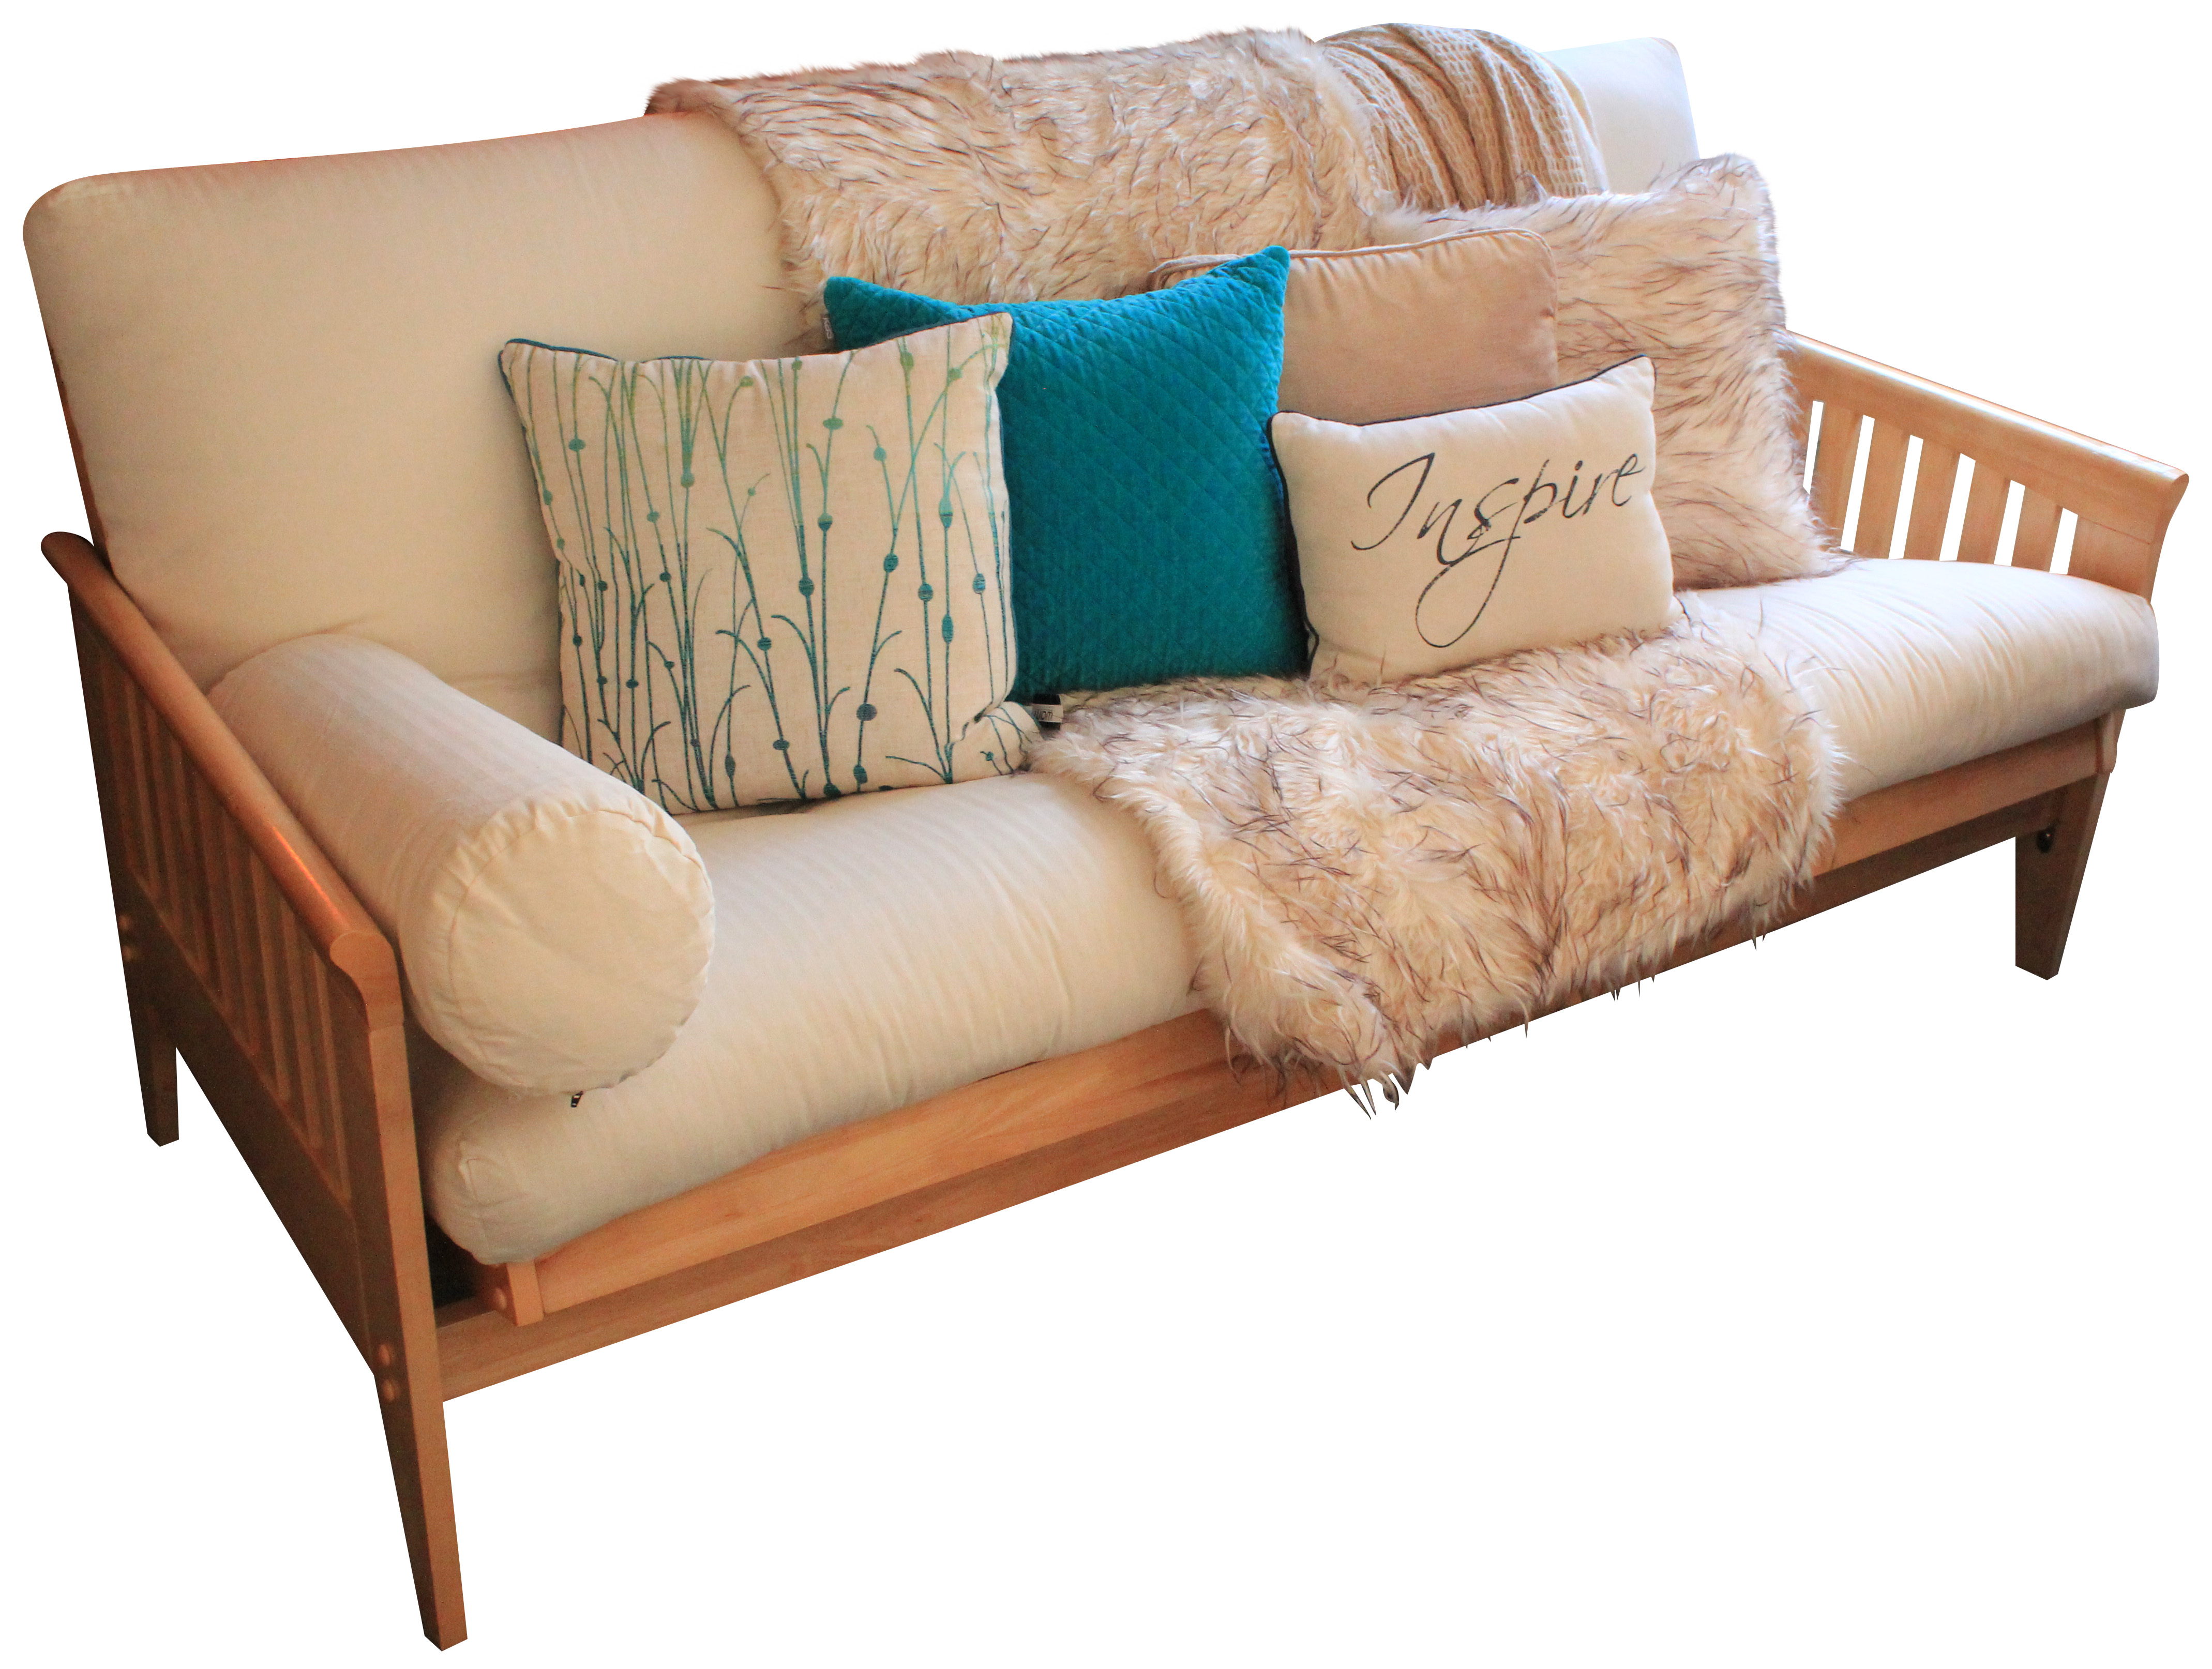 double futon sofa bed ebay